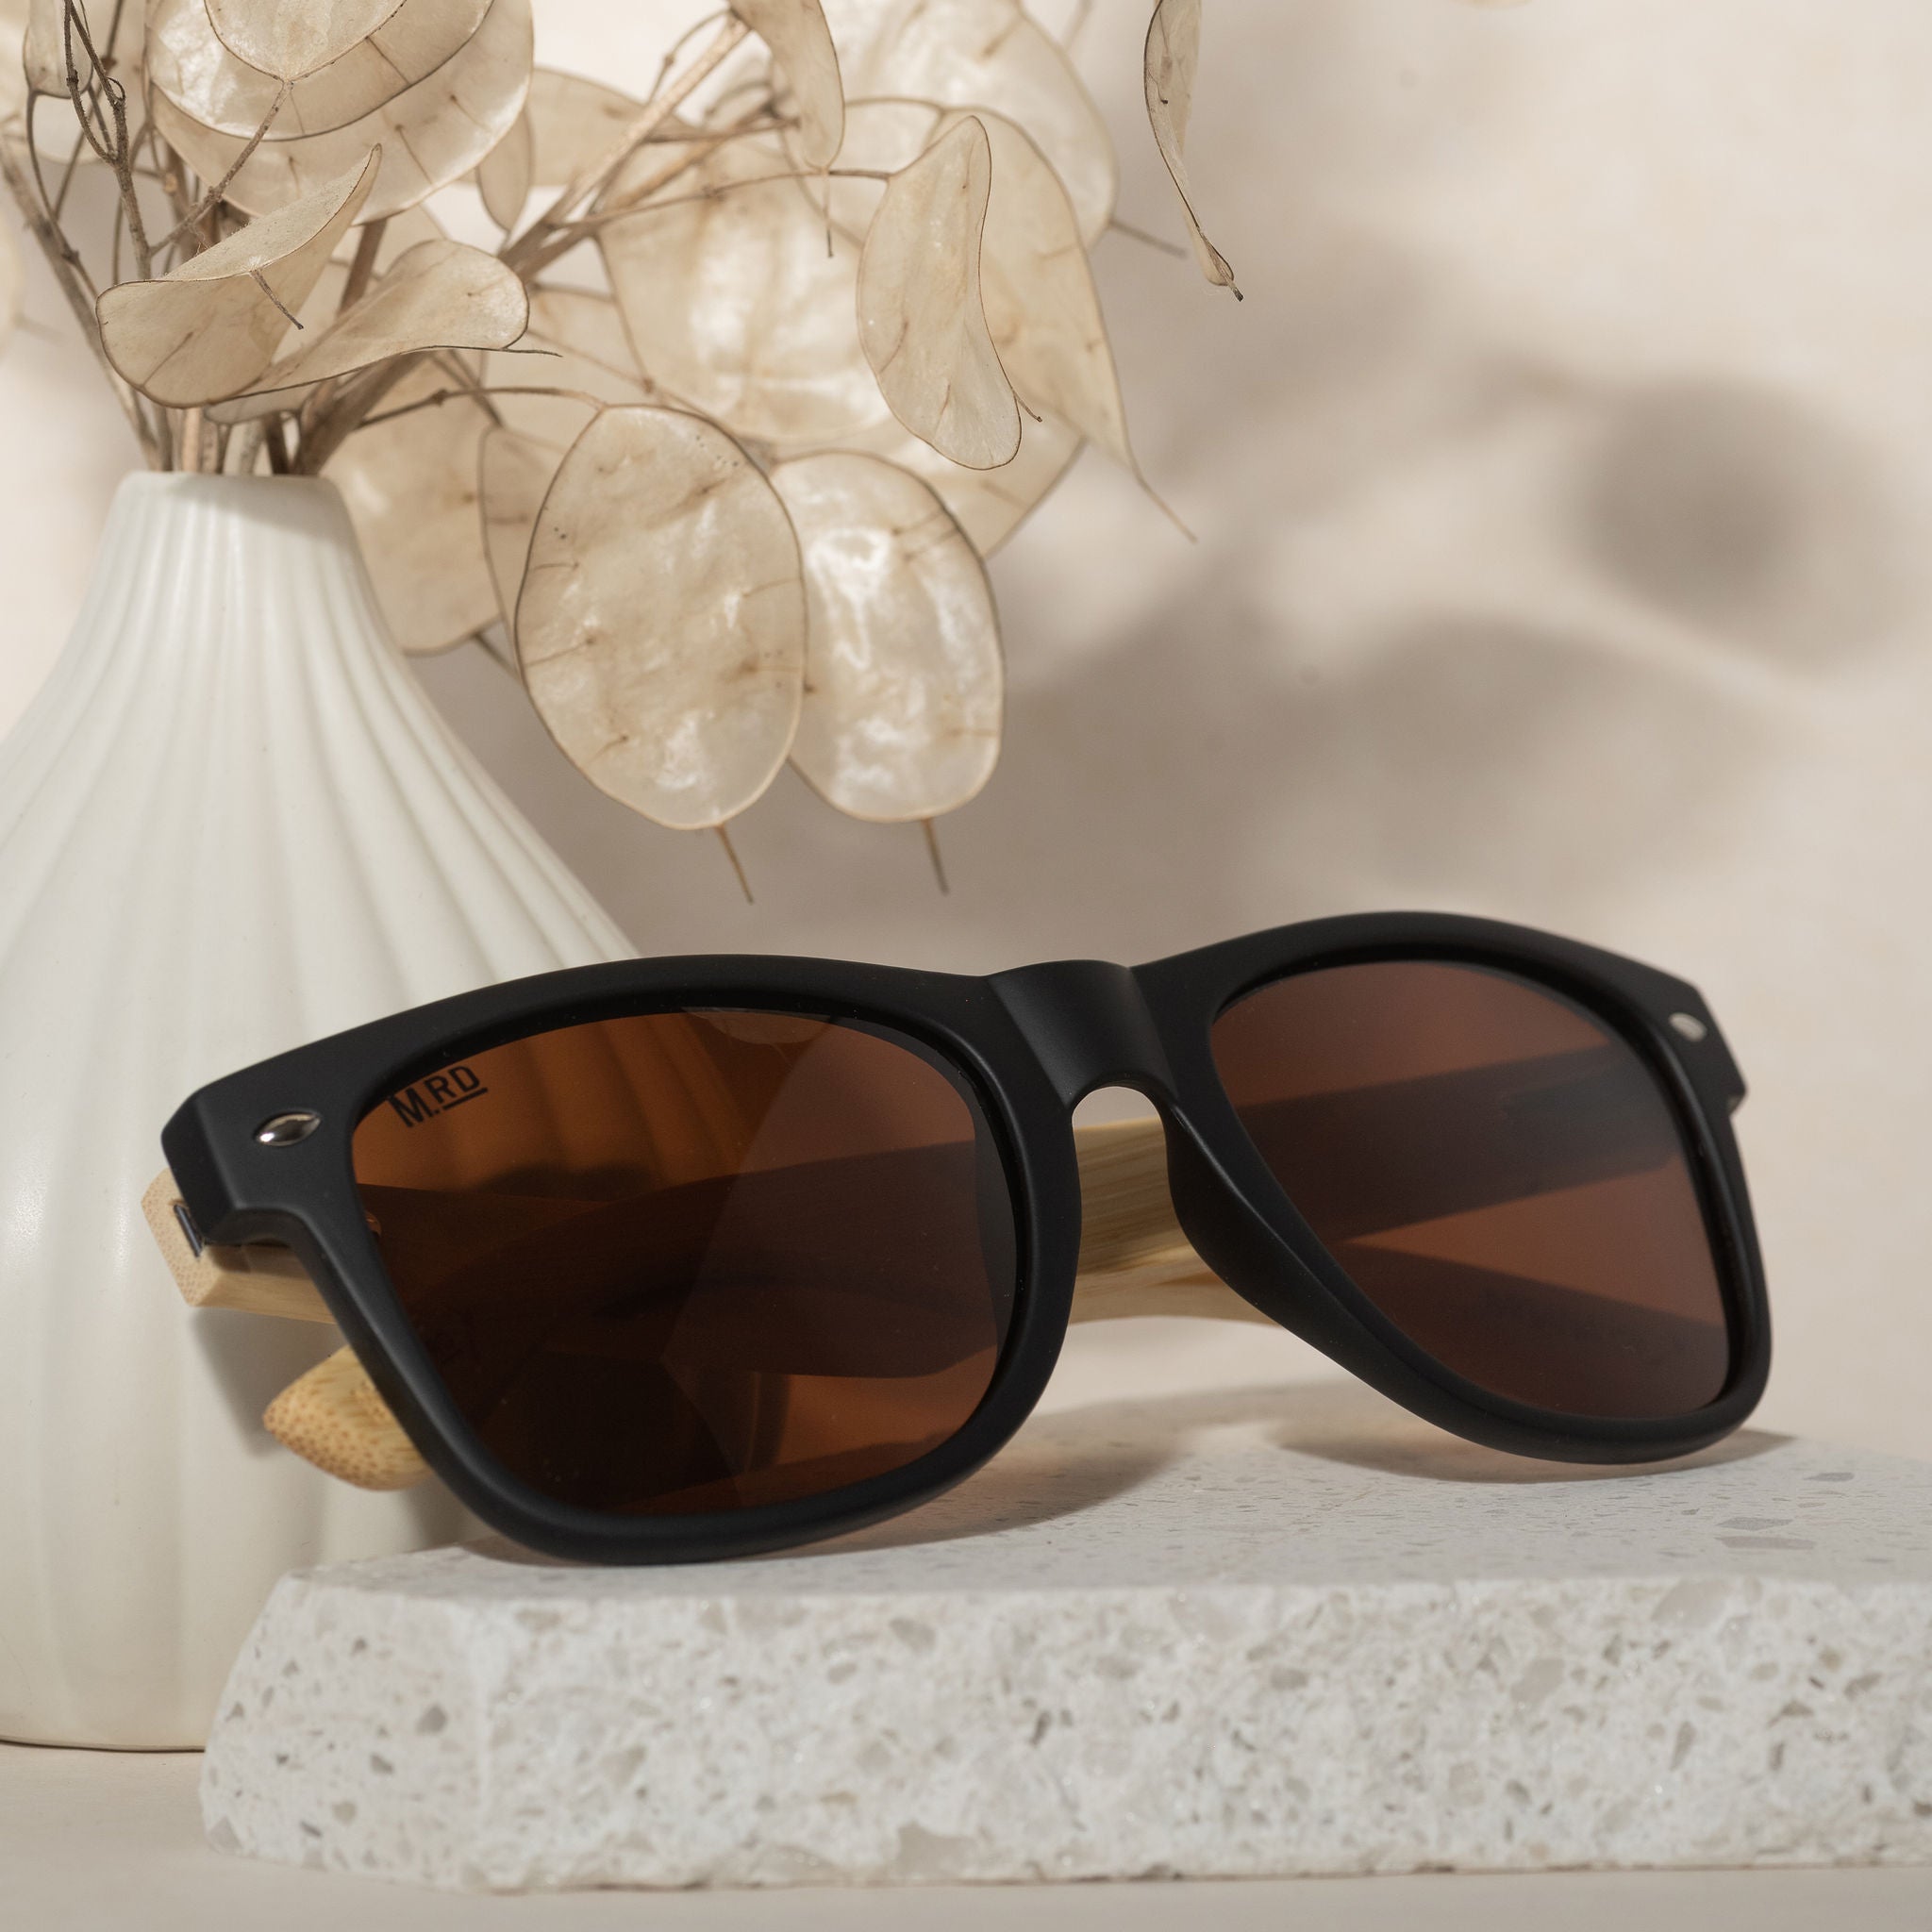 ORIGINAL WAYFARER CLASSIC Sunglasses in Black and Green - RB2140 | Ray-Ban®  US